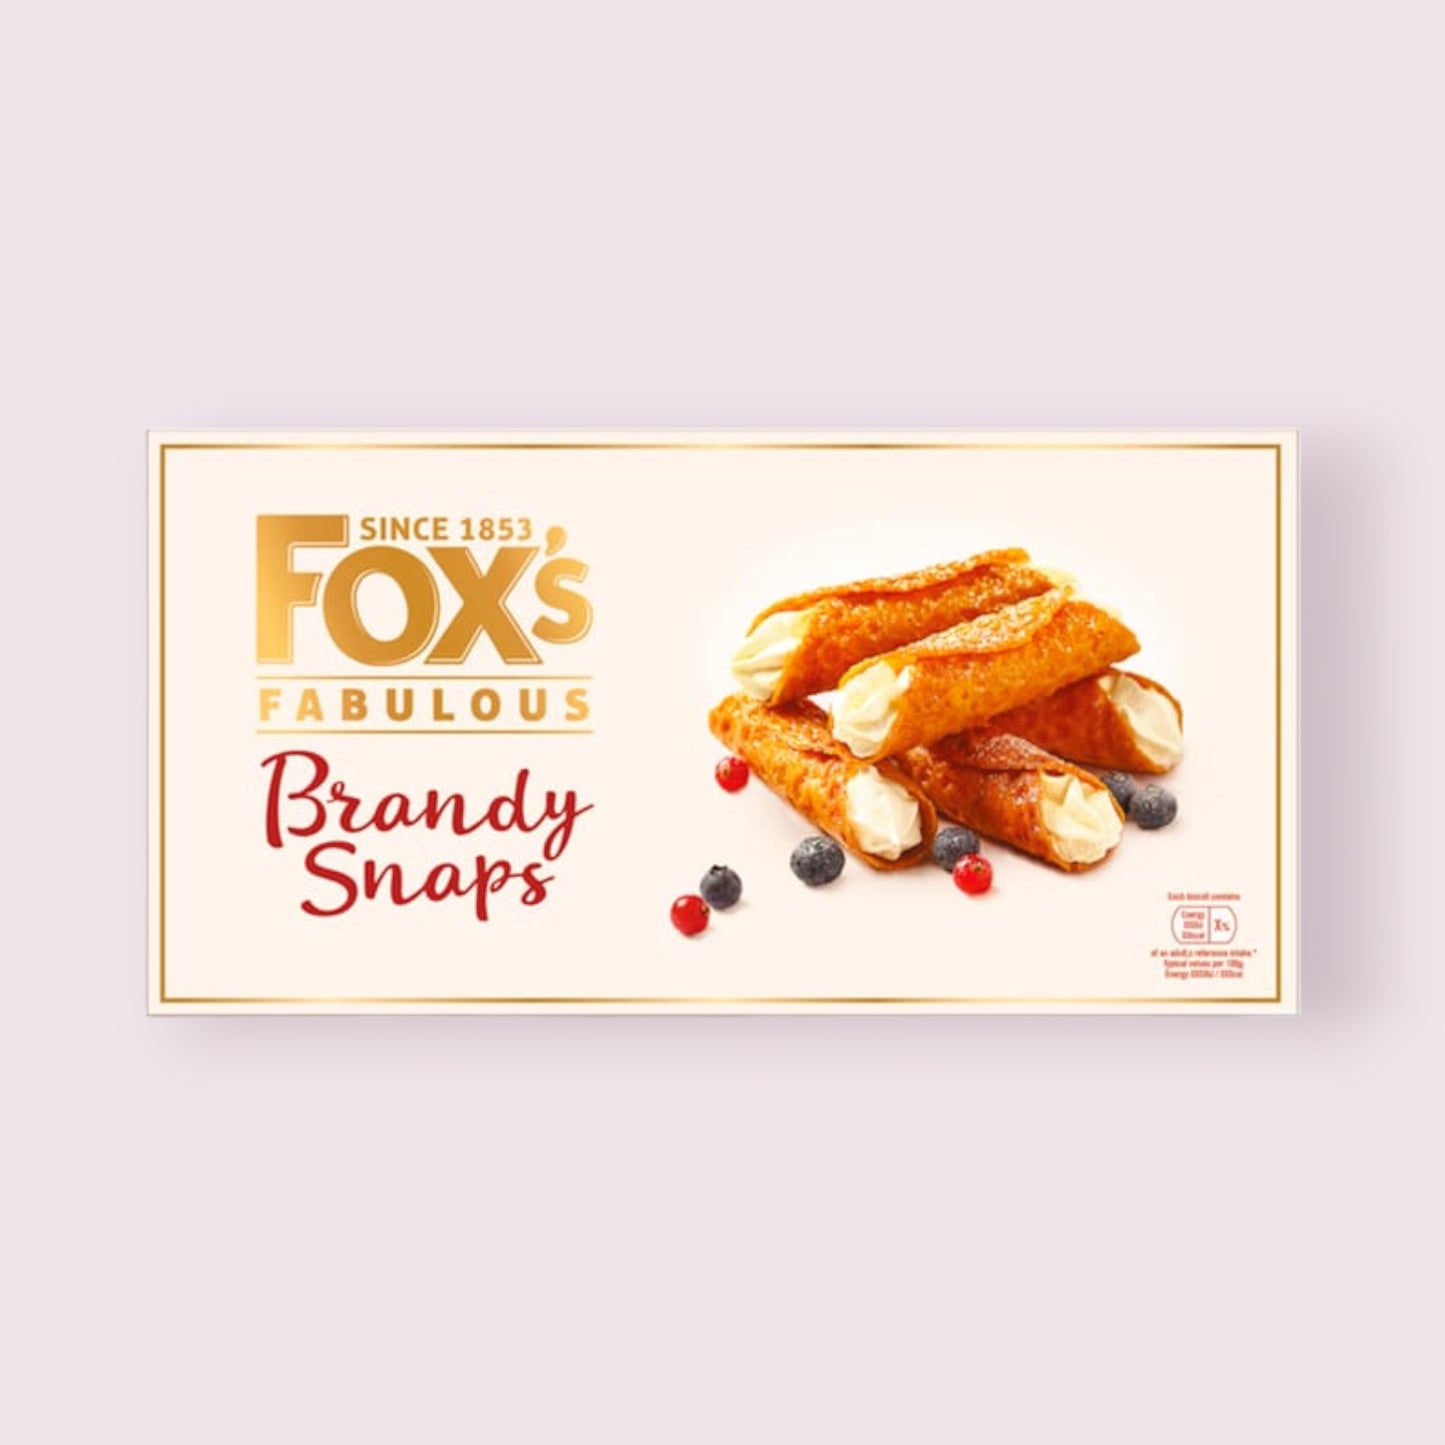 Fox’s Fabulous Brandy Snaps Box British Pixie Candy Shoppe   